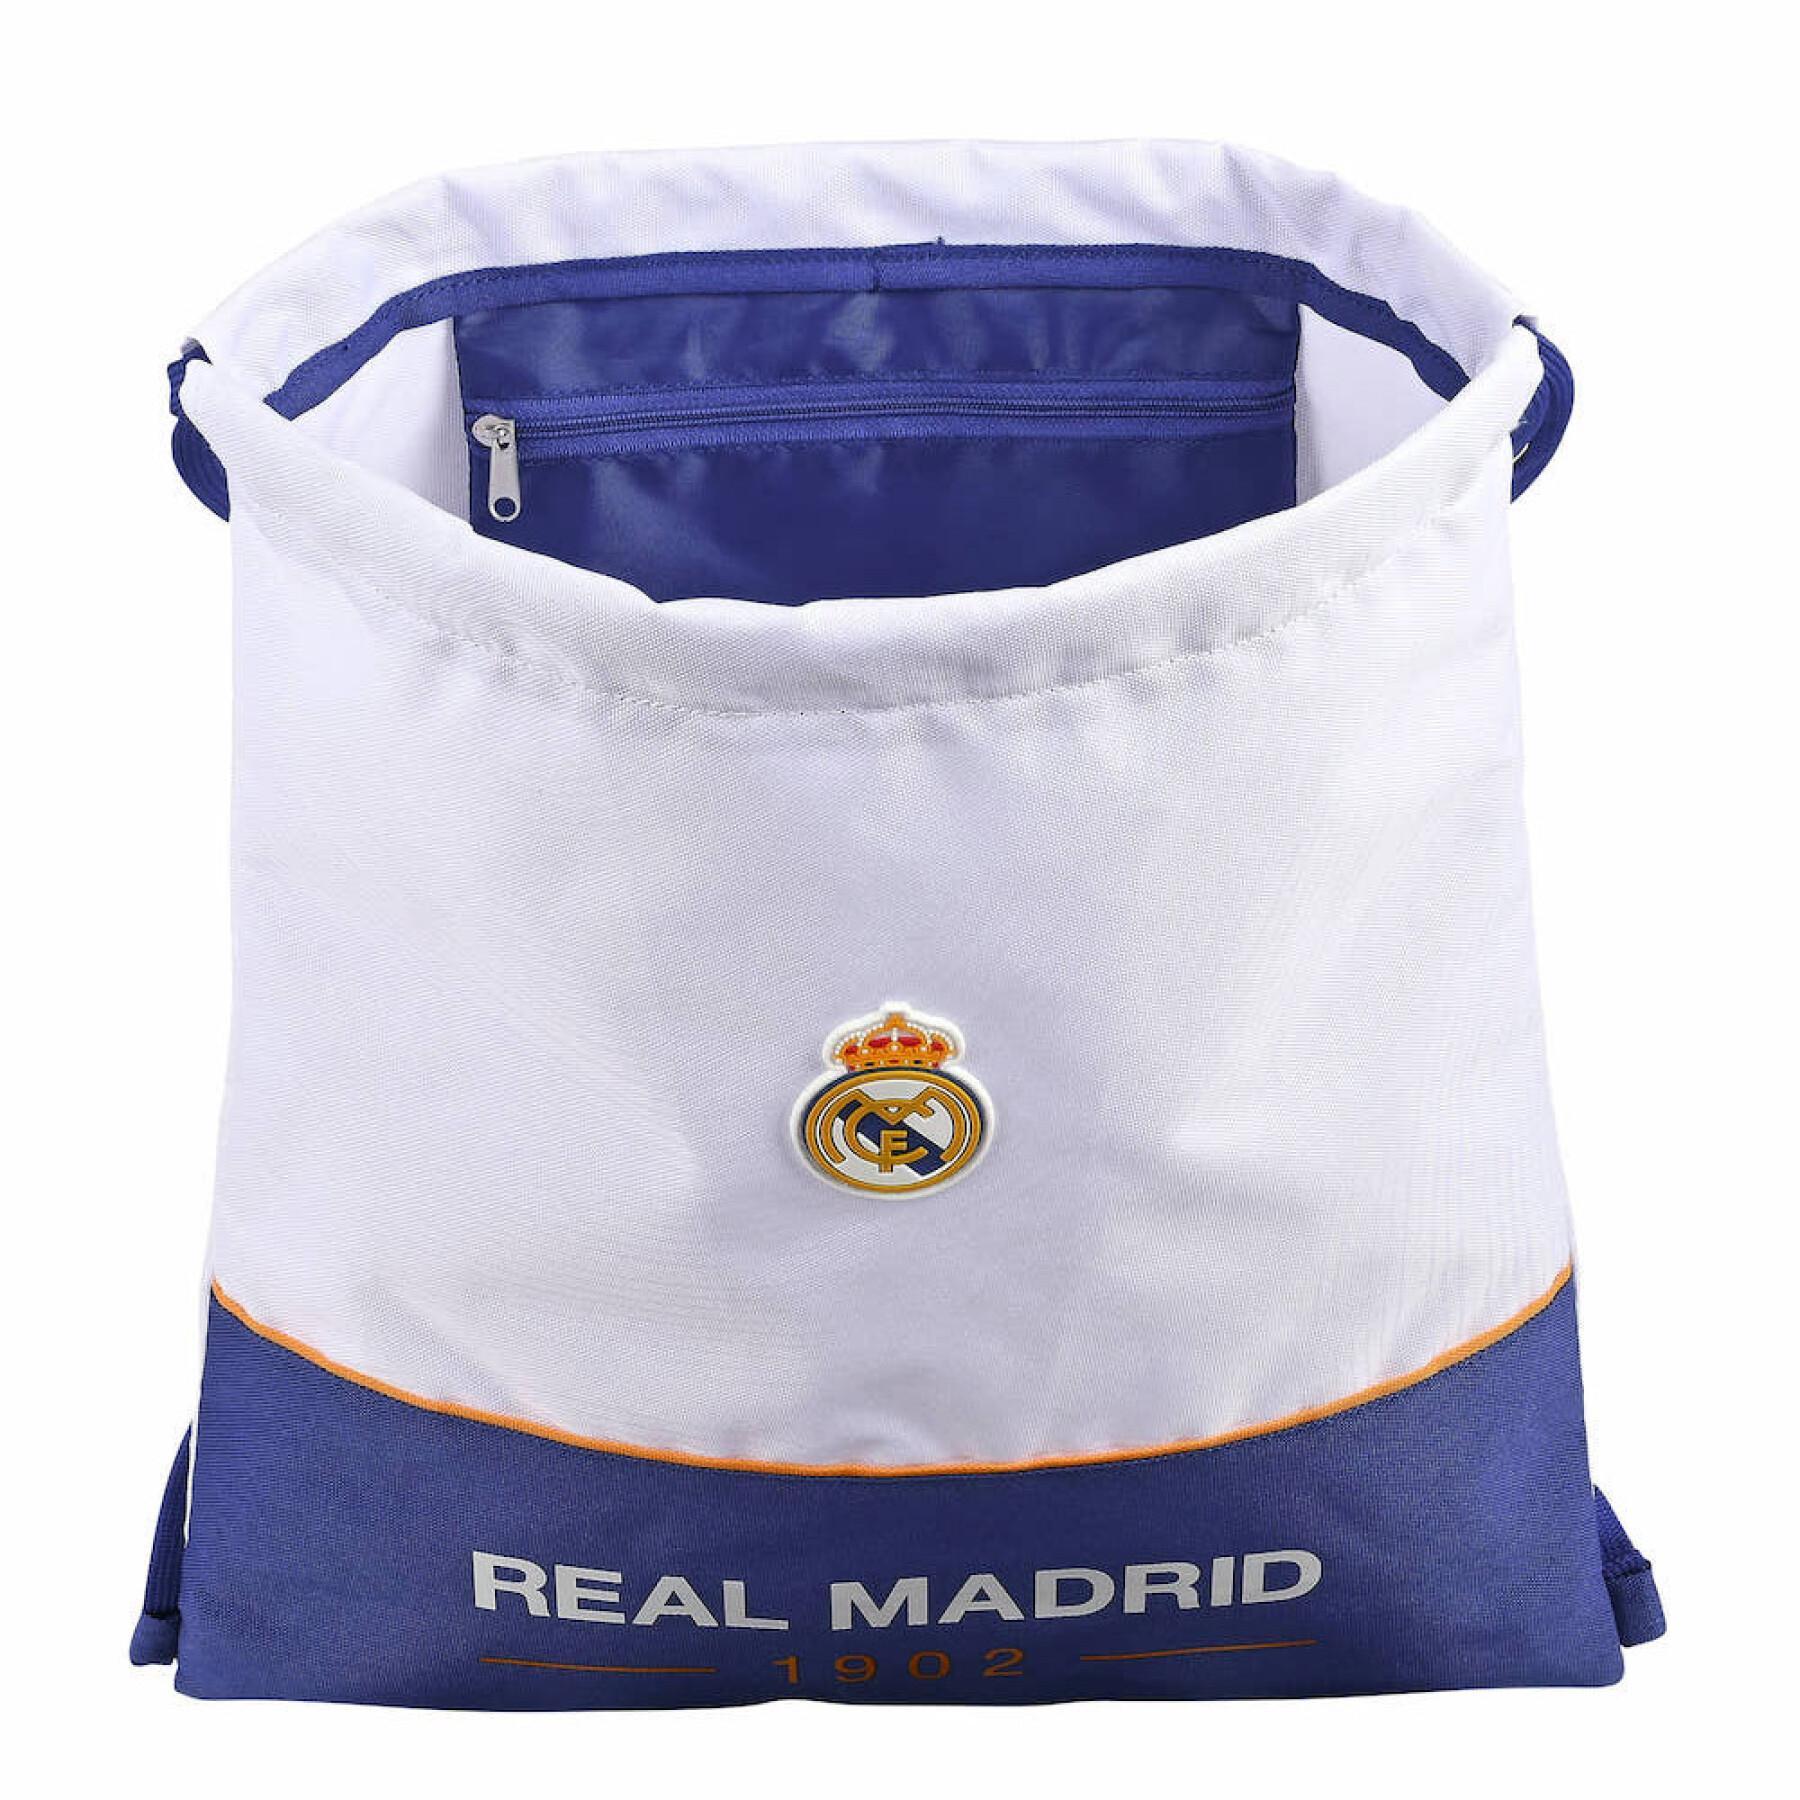 Kindersporttasche Real Madrid